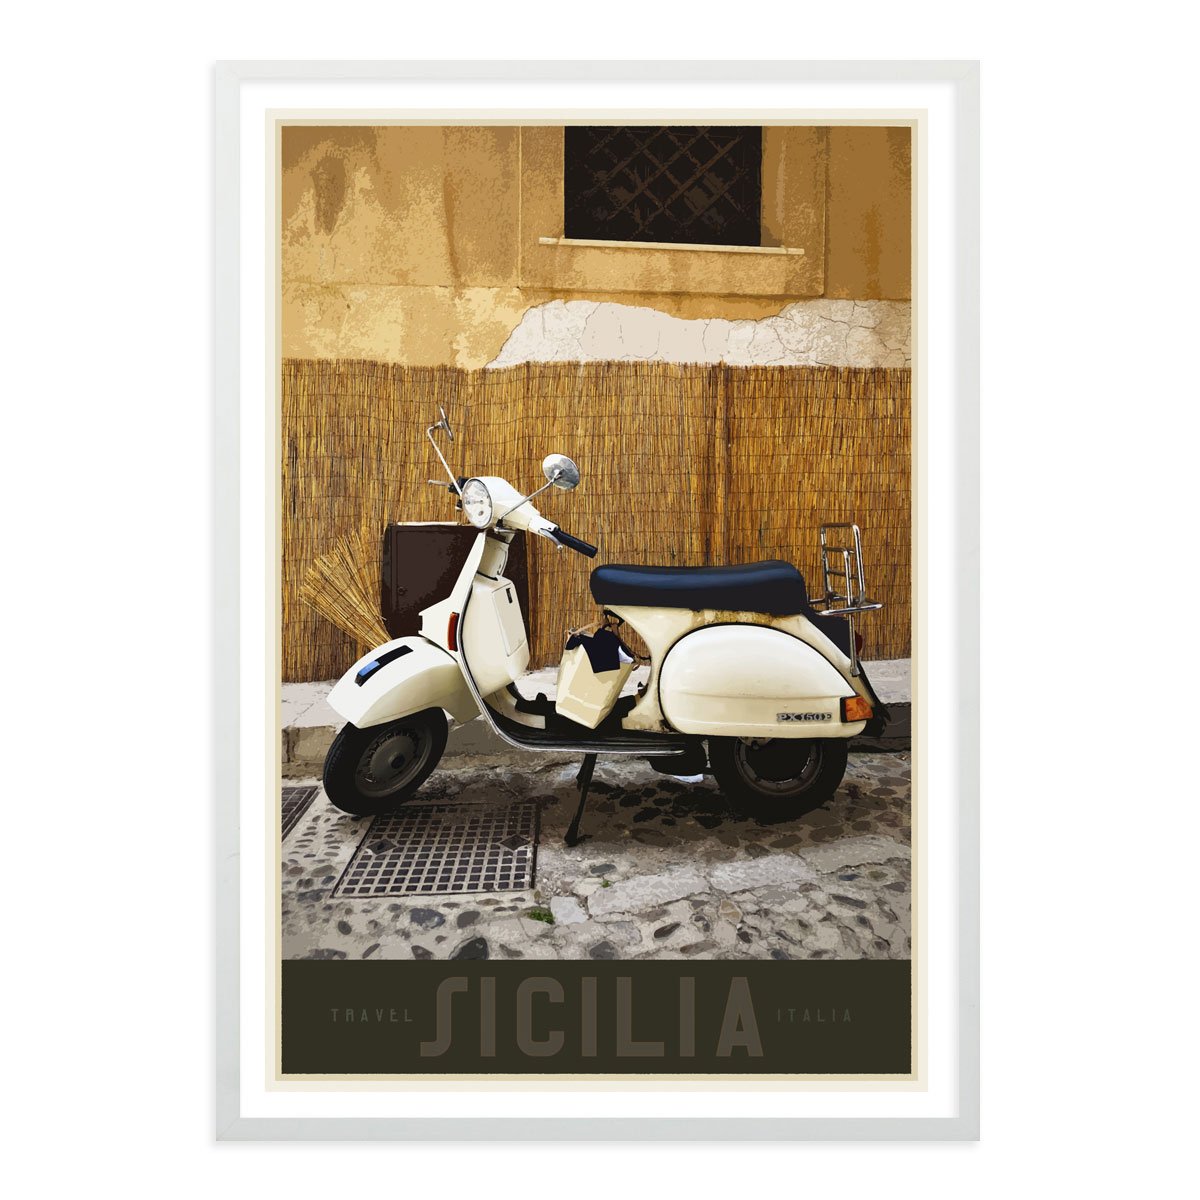 Sicily Vespa vintage travel style white framed poster designed by places we luv